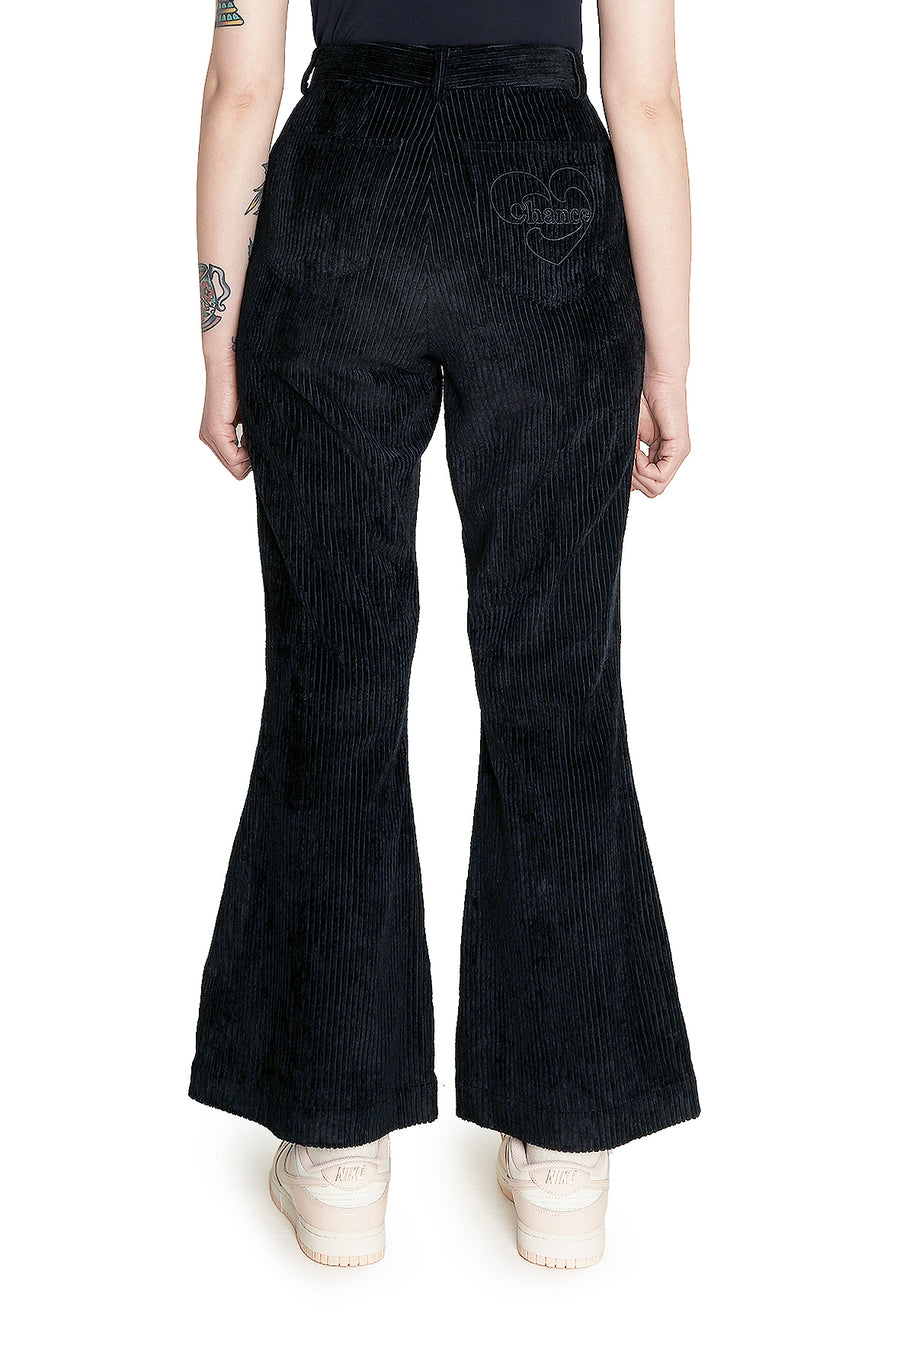 Black Corduroy Flare Trousers